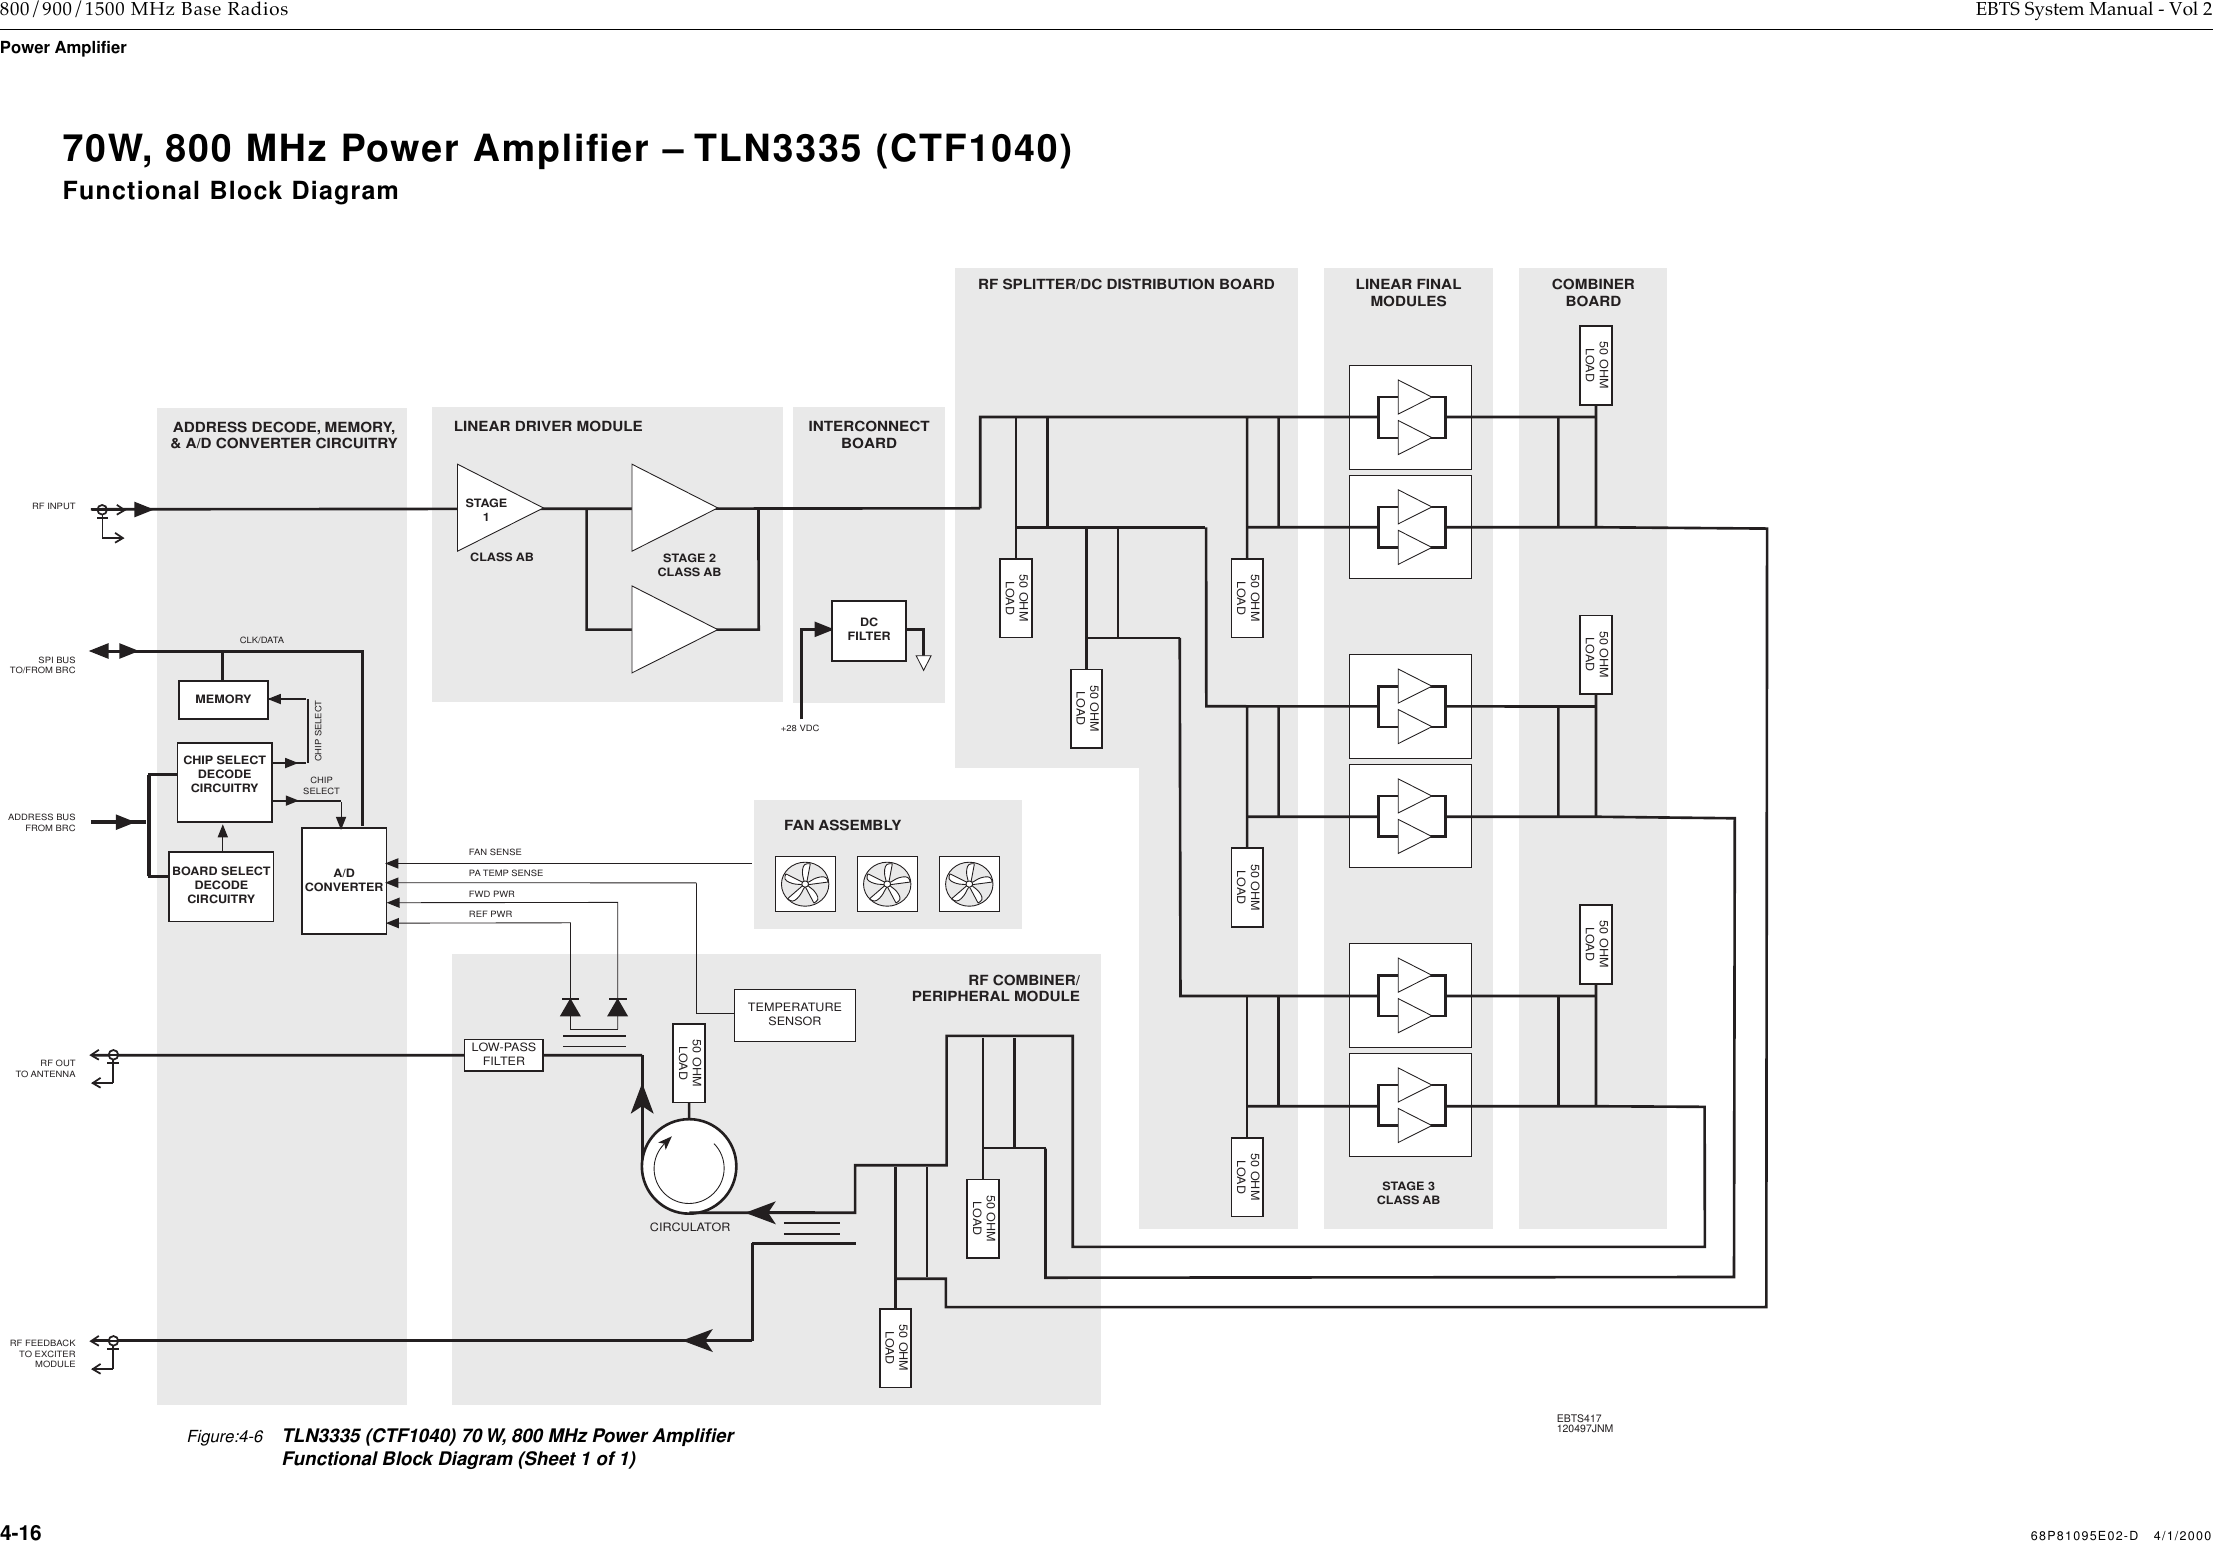  4-16 68P81095E02-D   4/1/2000 800/900/1500 MHz Base Radios EBTS System Manual - Vol 2 Power Amplifier  COMBINERBOARDLINEAR DRIVER MODULELINEAR FINALMODULES50 OHMLOADADDRESS BUSFROM BRCSPI BUSTO/FROM BRCADDRESS DECODE, MEMORY,&amp; A/D CONVERTER CIRCUITRYMEMORYA/DCONVERTERBOARD SELECTDECODECIRCUITRYPA TEMP SENSECHIPSELECTCHIP SELECTDECODECIRCUITRYCHIP SELECTRF COMBINER/PERIPHERAL MODULELOW-PASSFILTERRF INPUTRF OUTTO ANTENNARF FEEDBACKTO EXCITERMODULEREF PWRFWD PWRFAN SENSEFAN ASSEMBLYTEMPERATURESENSOREBTS417120497JNMCLK/DATACIRCULATOR50 OHMLOAD50 OHMLOAD50 OHMLOAD50 OHMLOAD50 OHMLOAD50 OHMLOADSTAGE1CLASS AB STAGE 2CLASS ABRF SPLITTER/DC DISTRIBUTION BOARDINTERCONNECTBOARDSTAGE 3CLASS AB50 OHMLOAD50 OHMLOAD50 OHMLOAD50 OHMLOADDCFILTER+28 VDCFigure:4-6TLN3335 (CTF1040) 70 W, 800 MHz Power Ampliﬁer Functional Block Diagram (Sheet 1 of 1)70W, 800 MHz Power Ampliﬁer – TLN3335 (CTF1040)Functional Block Diagram